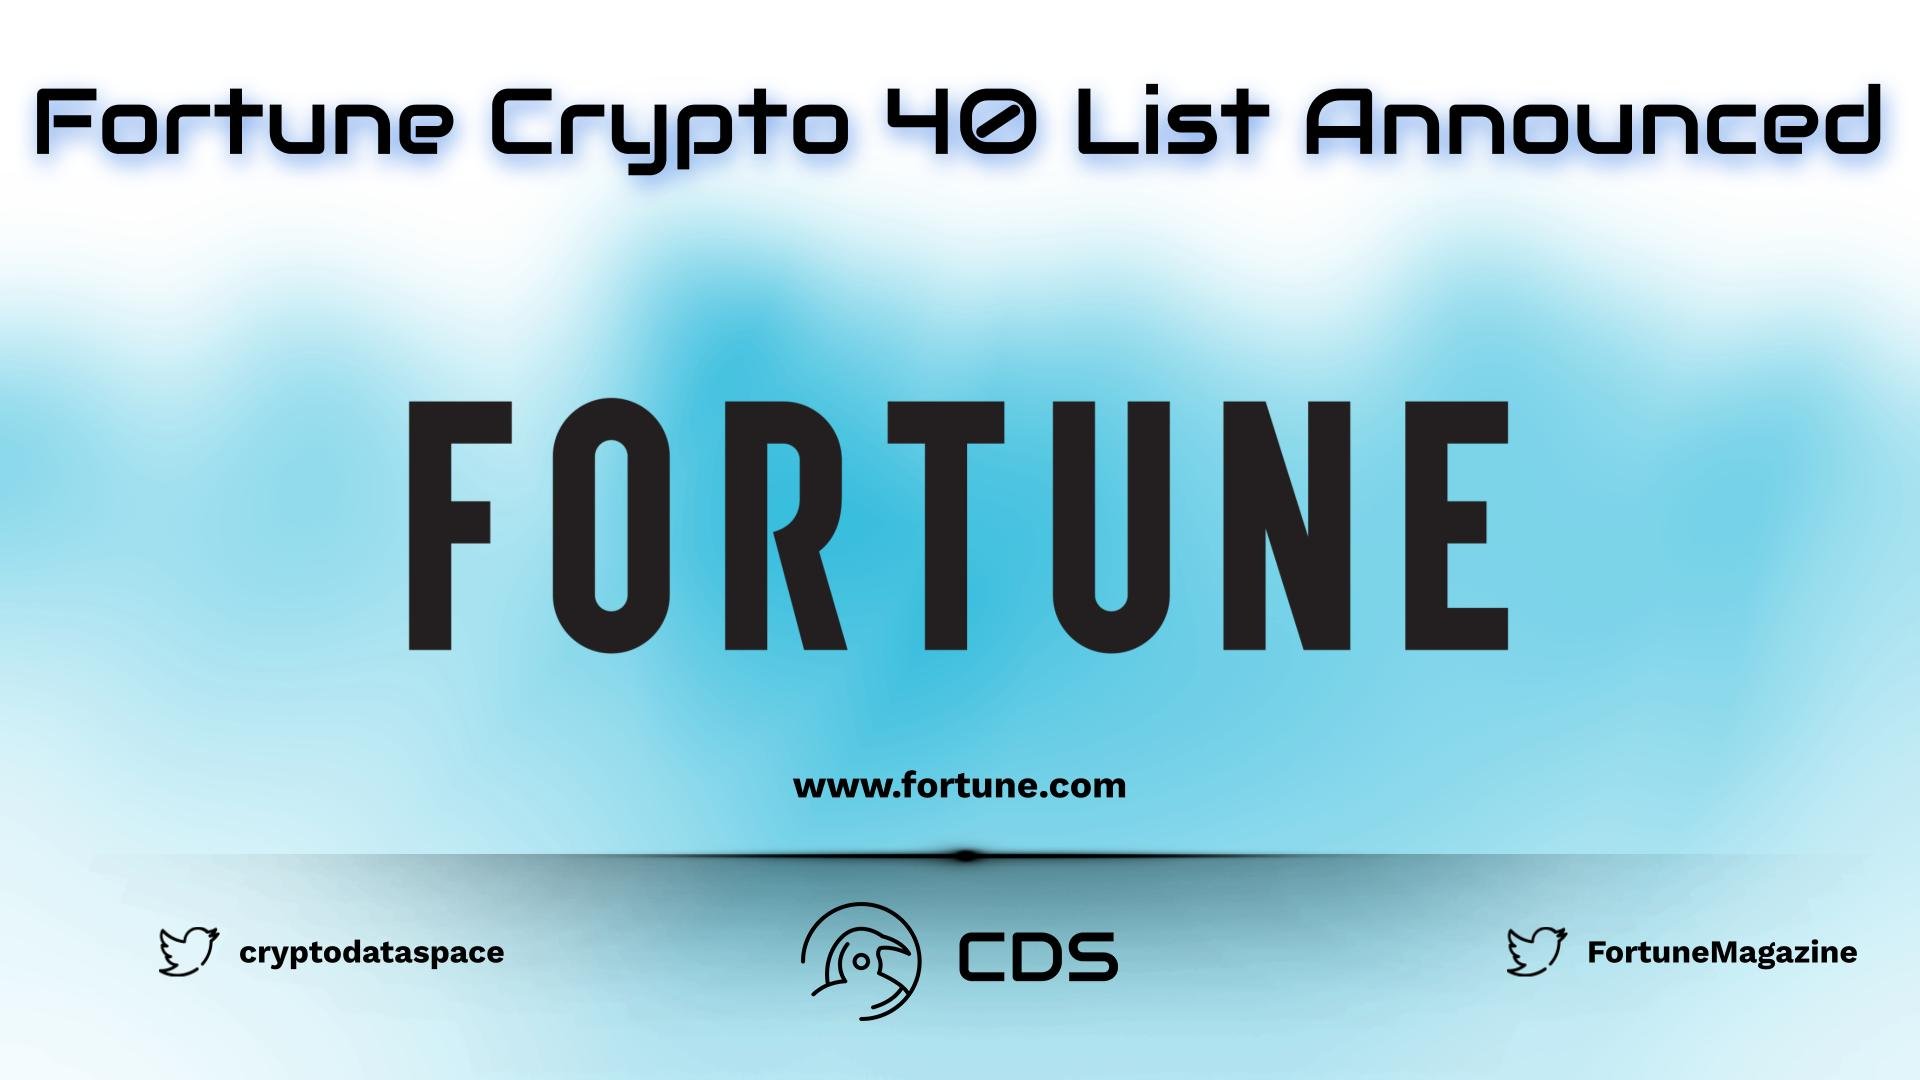 Fortune Crypto 40 List Announced